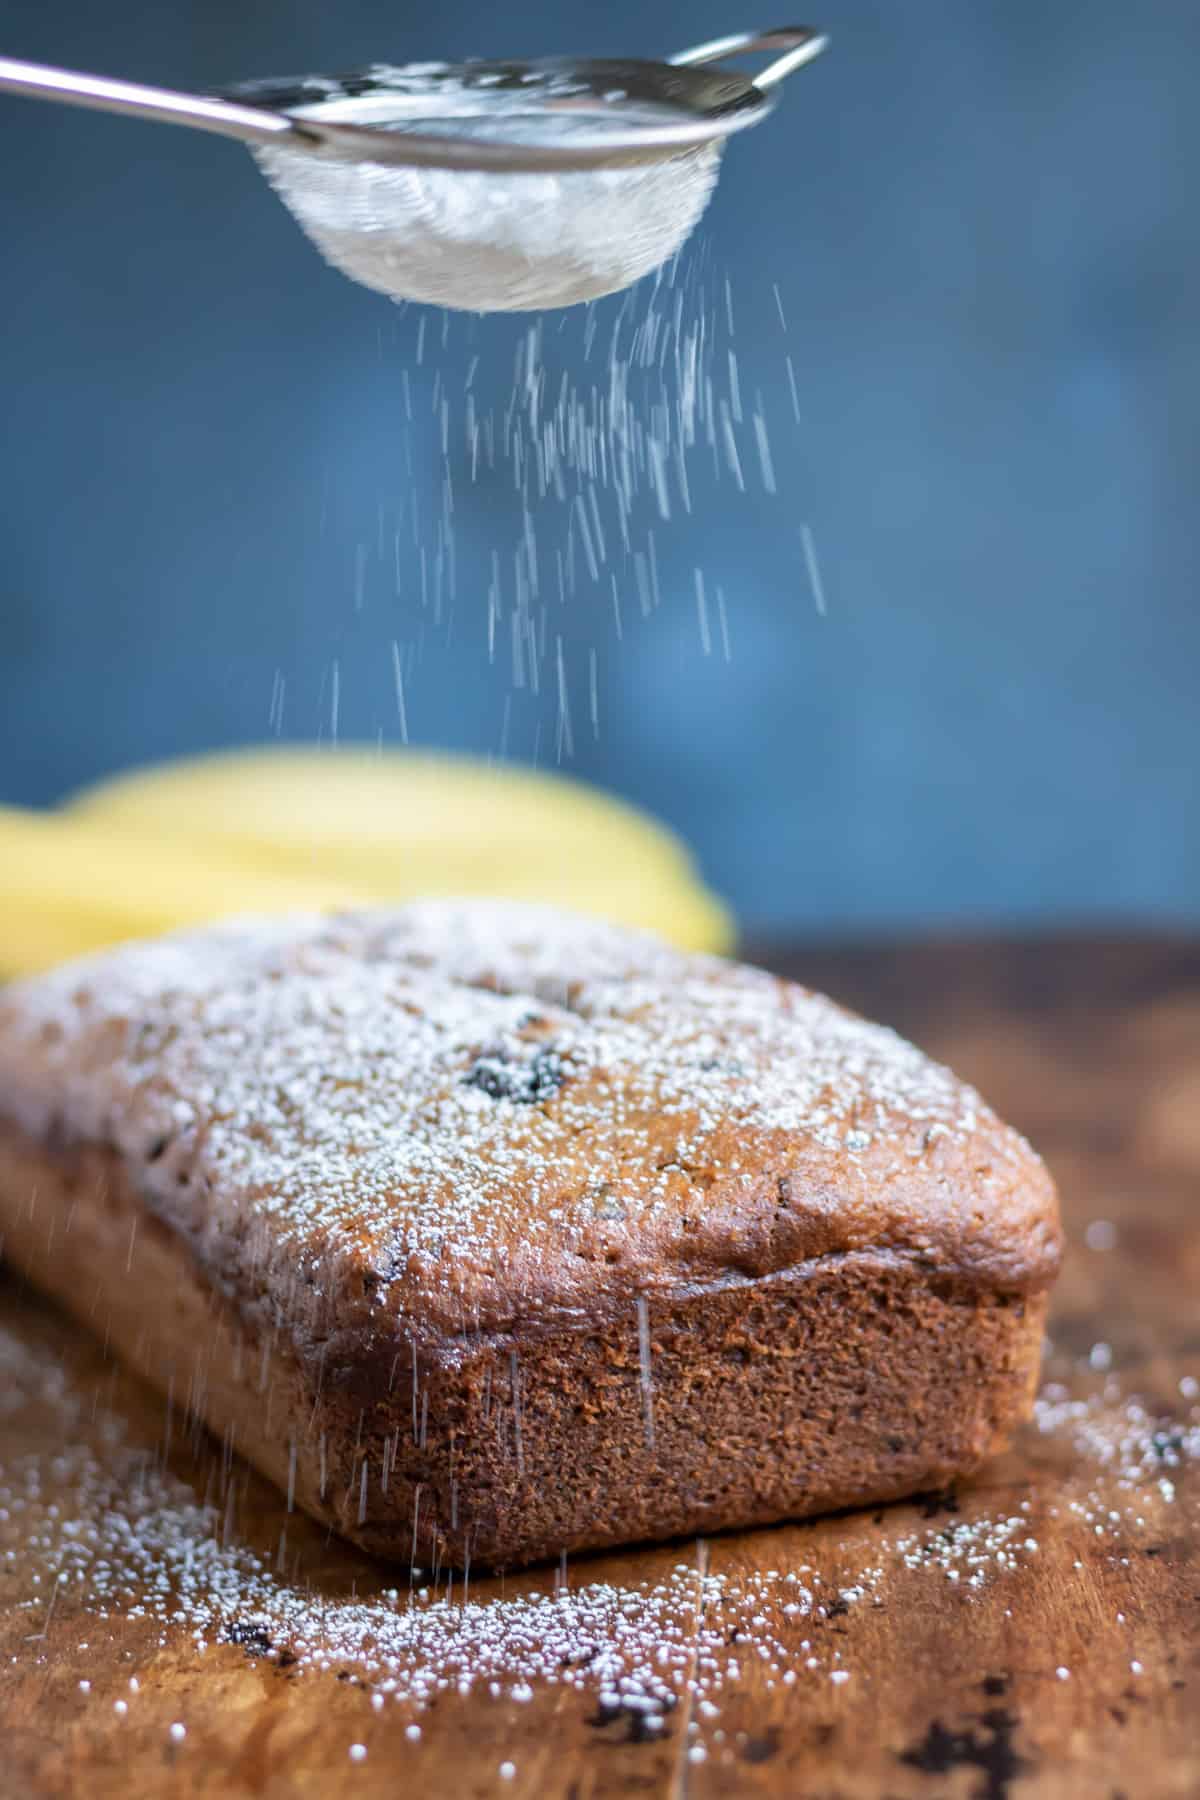 Sprinkling icing sugar onto the banana bread.